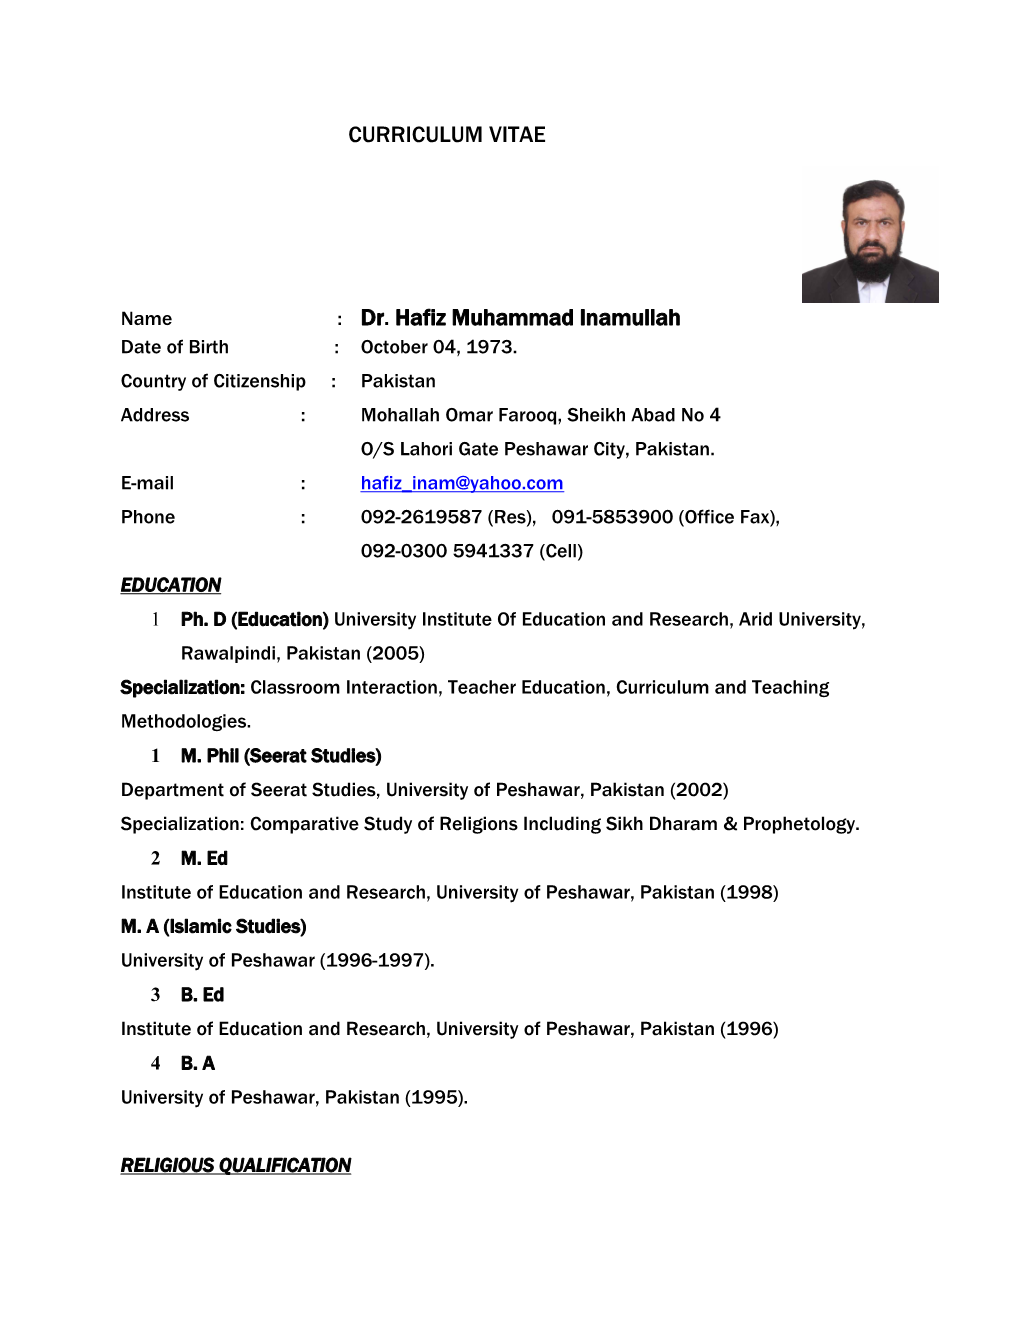 Name : Dr.Hafiz Muhammad Inamullah